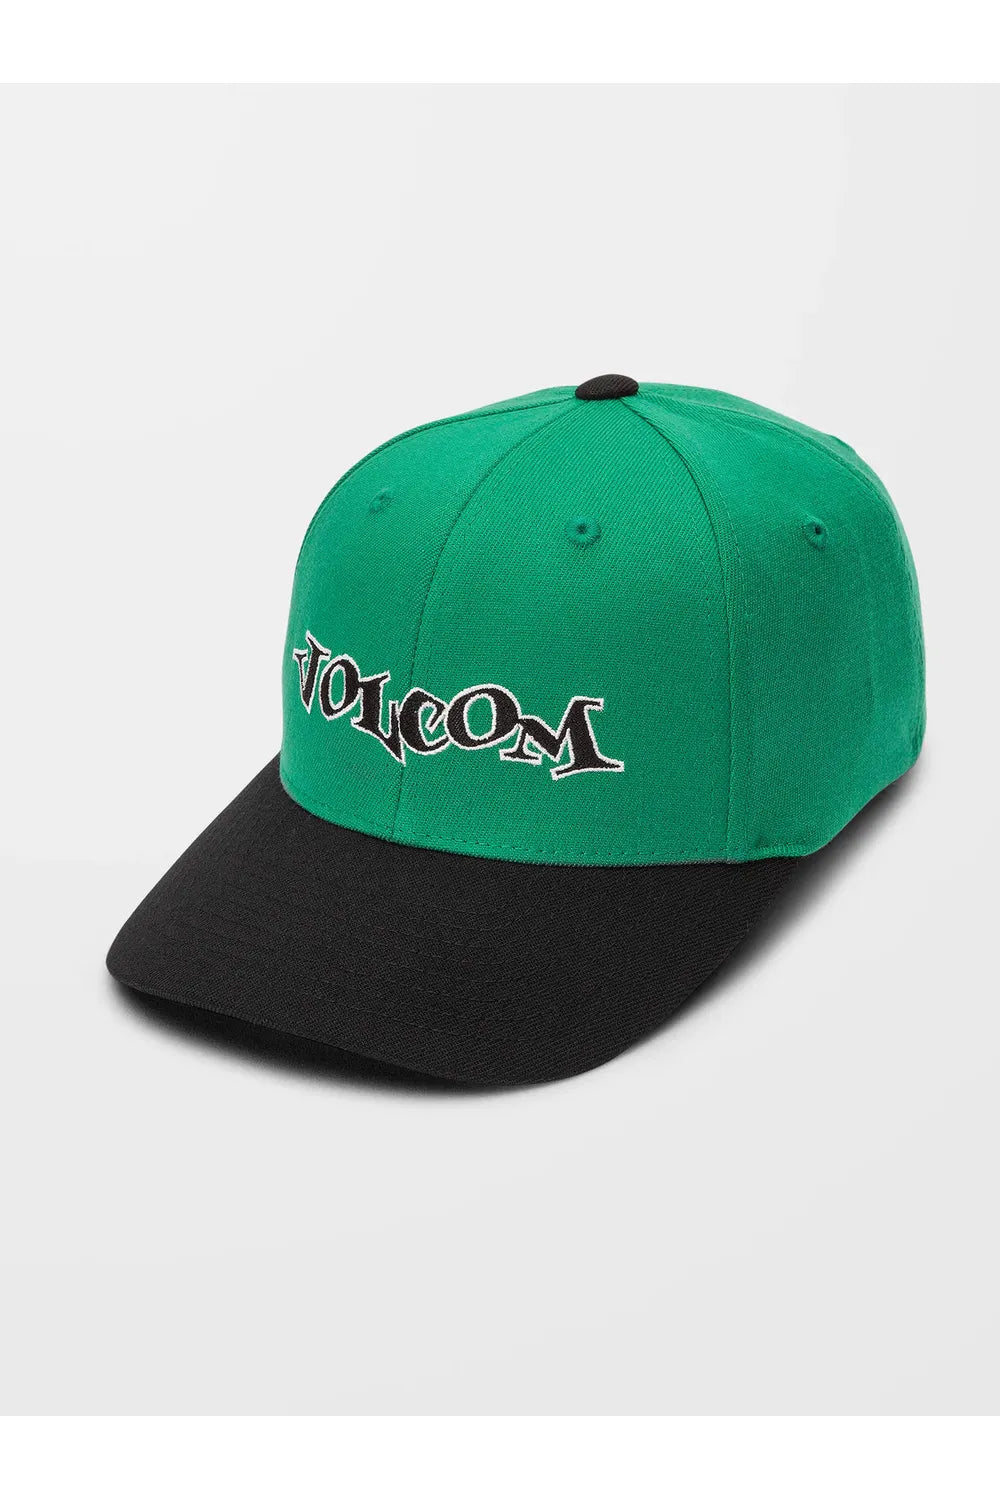 Volcom Demo Flexfit Hat